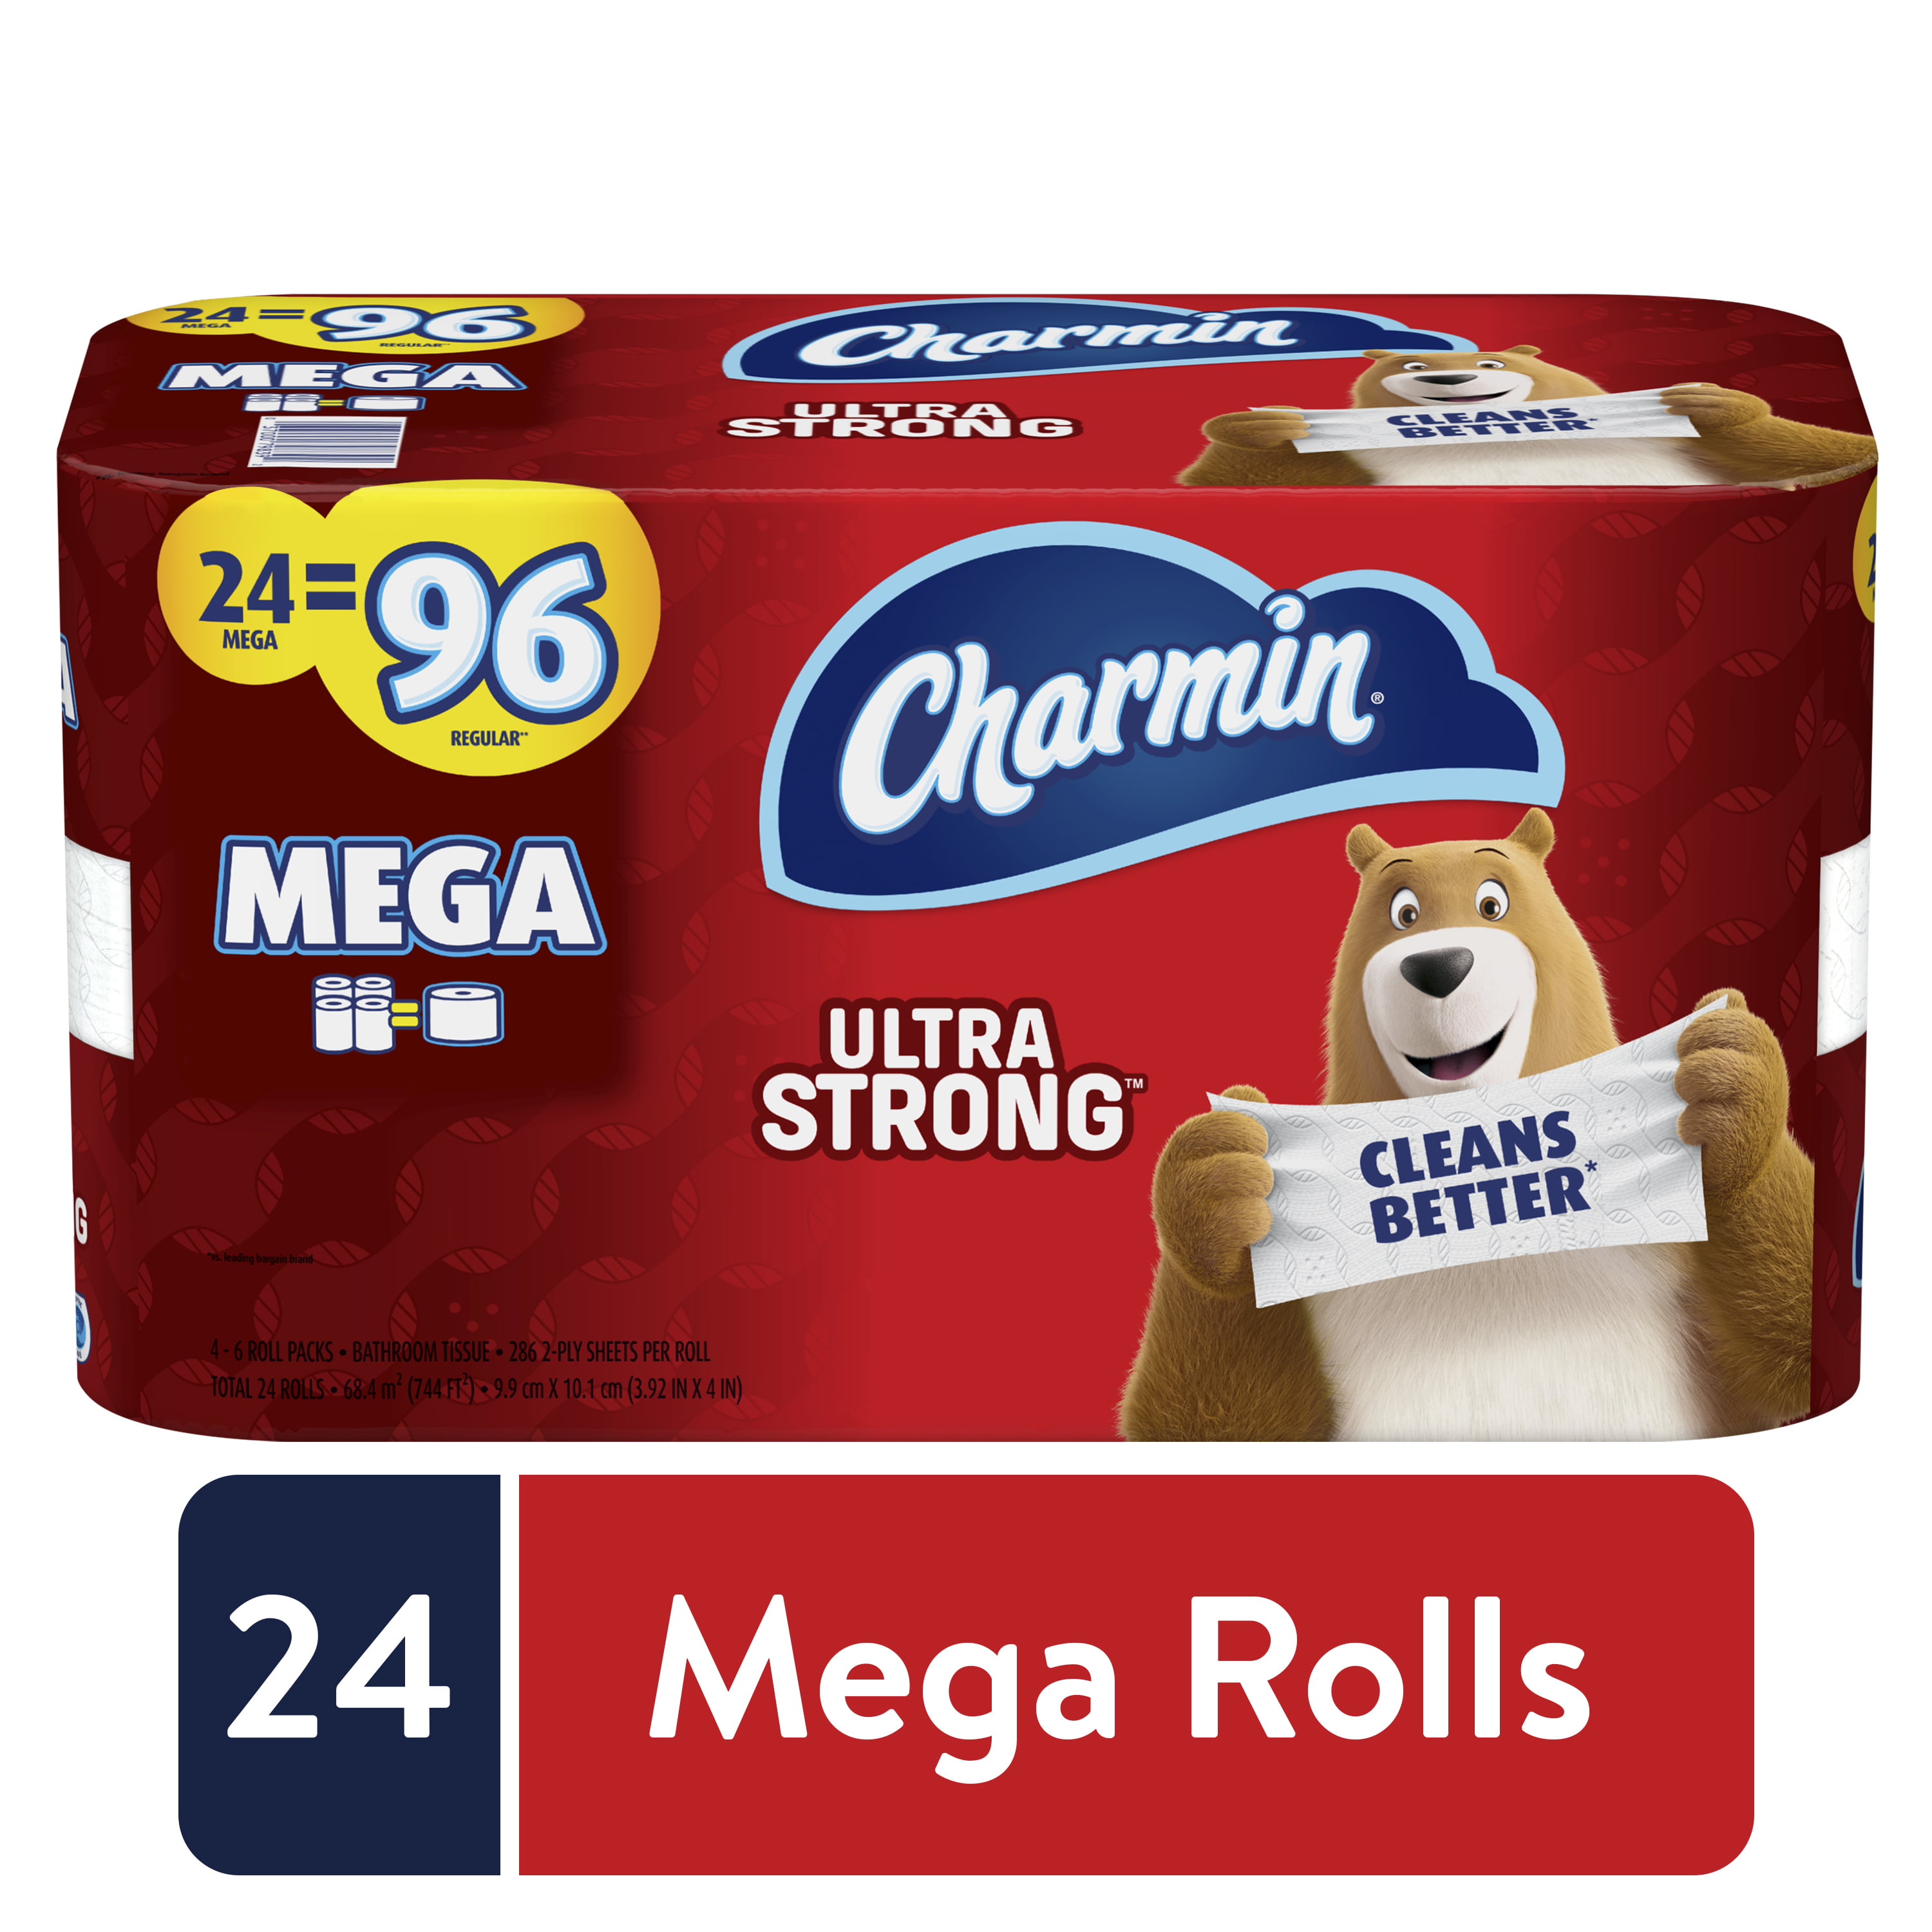 Charmin Ultra Strong Toilet Paper 24 Mega Rolls 6864 Sheets